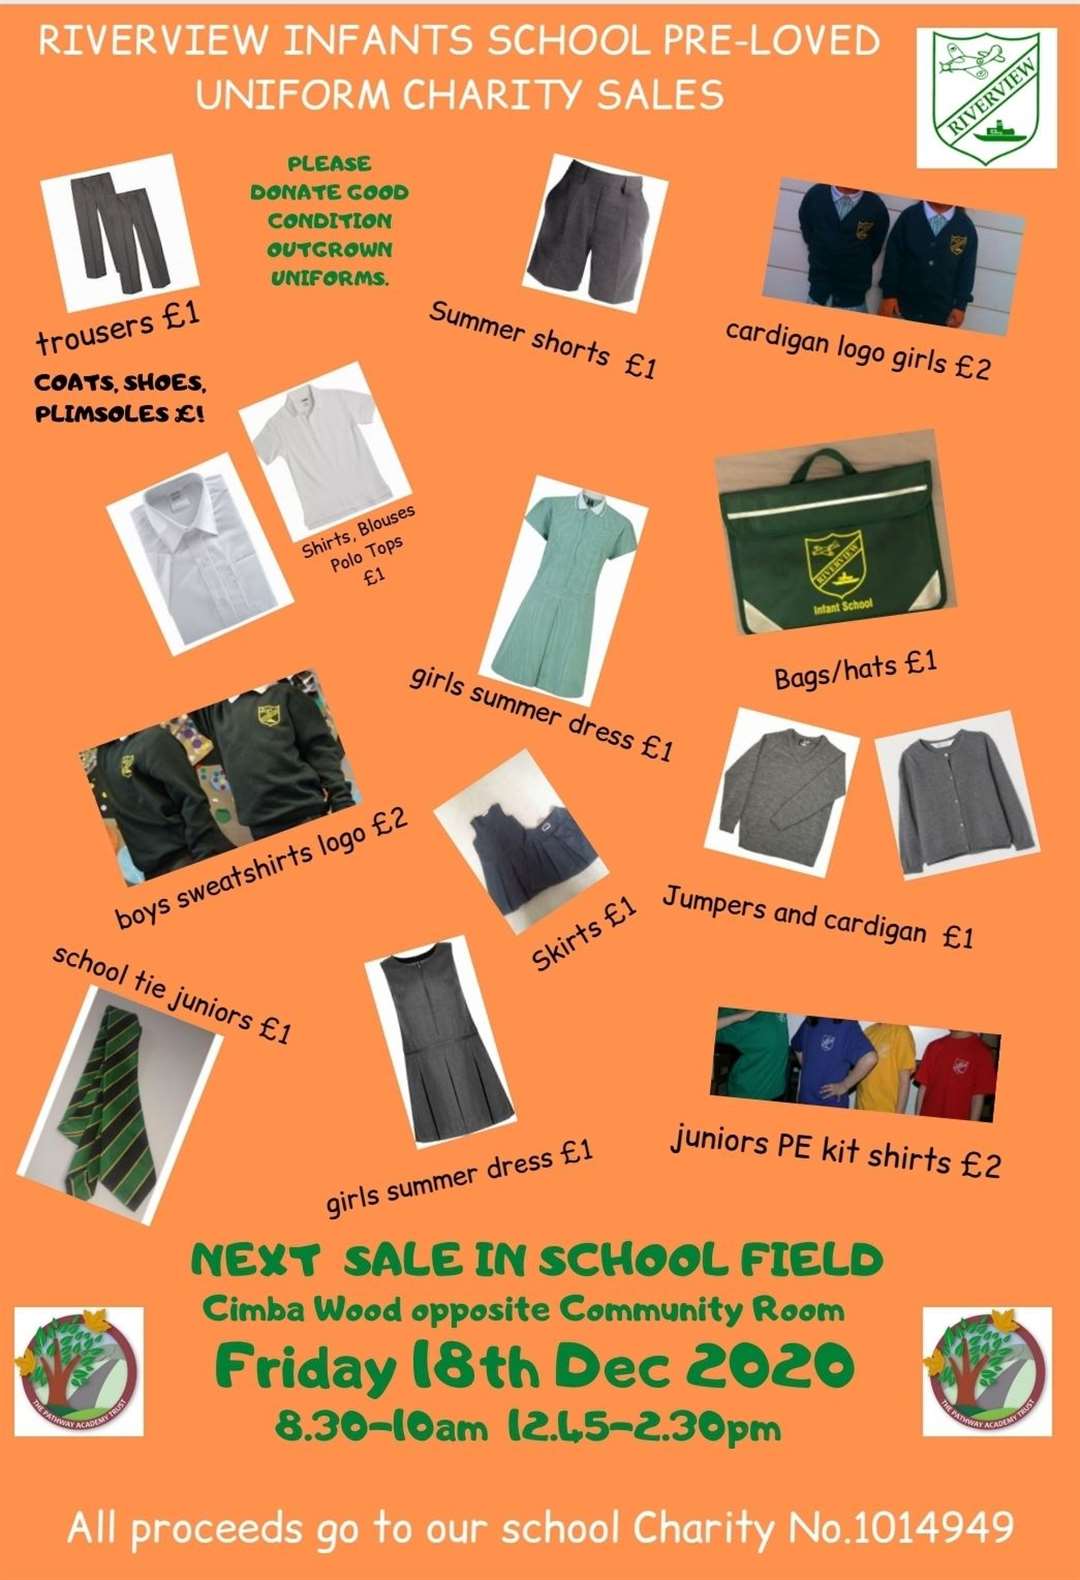 Riverview Infants School is holding a charity uniform sale